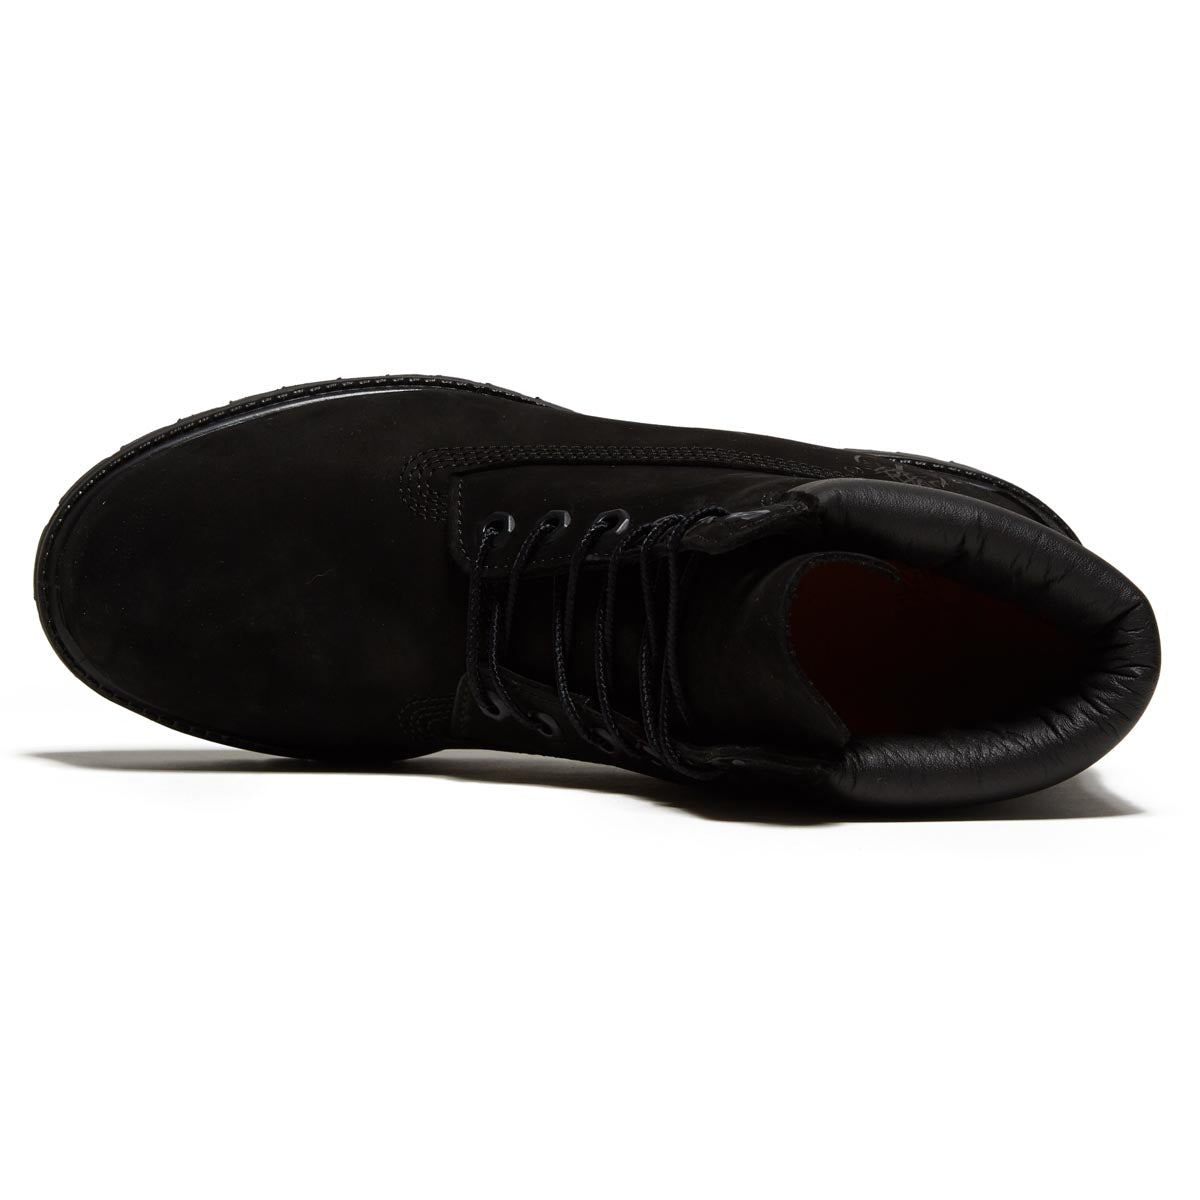 Timberland 6 Inch Premium Boots - Black Nubuck image 3